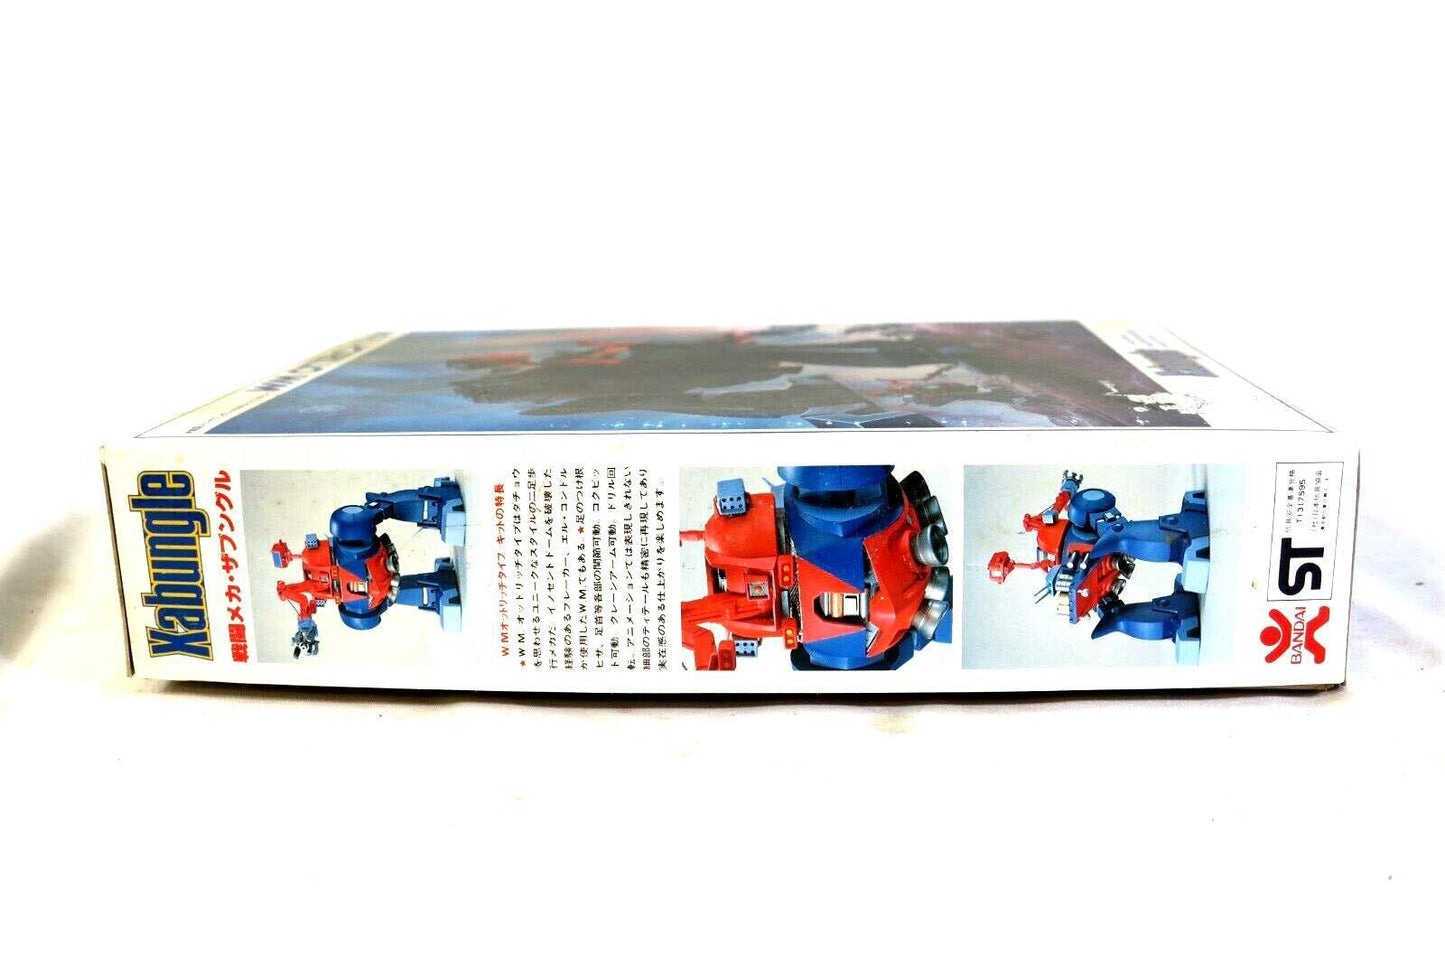 Bandai Xabungle 1/144 Walker Machine Ottrich Type Model Kit 36433 -700